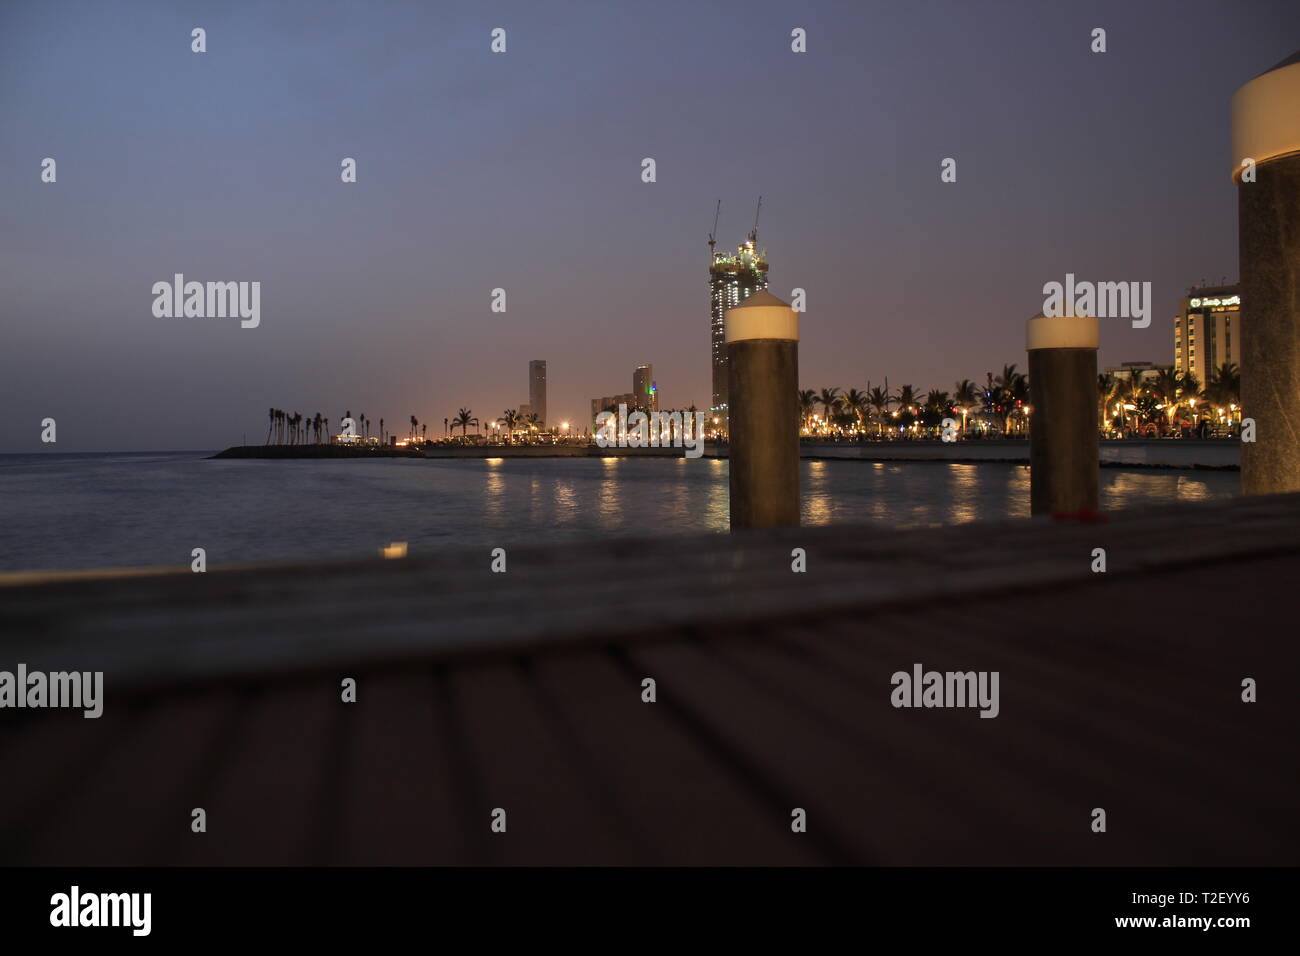 Jeddah City Skyline from Beachfront on Dock or Pier Stock Photo